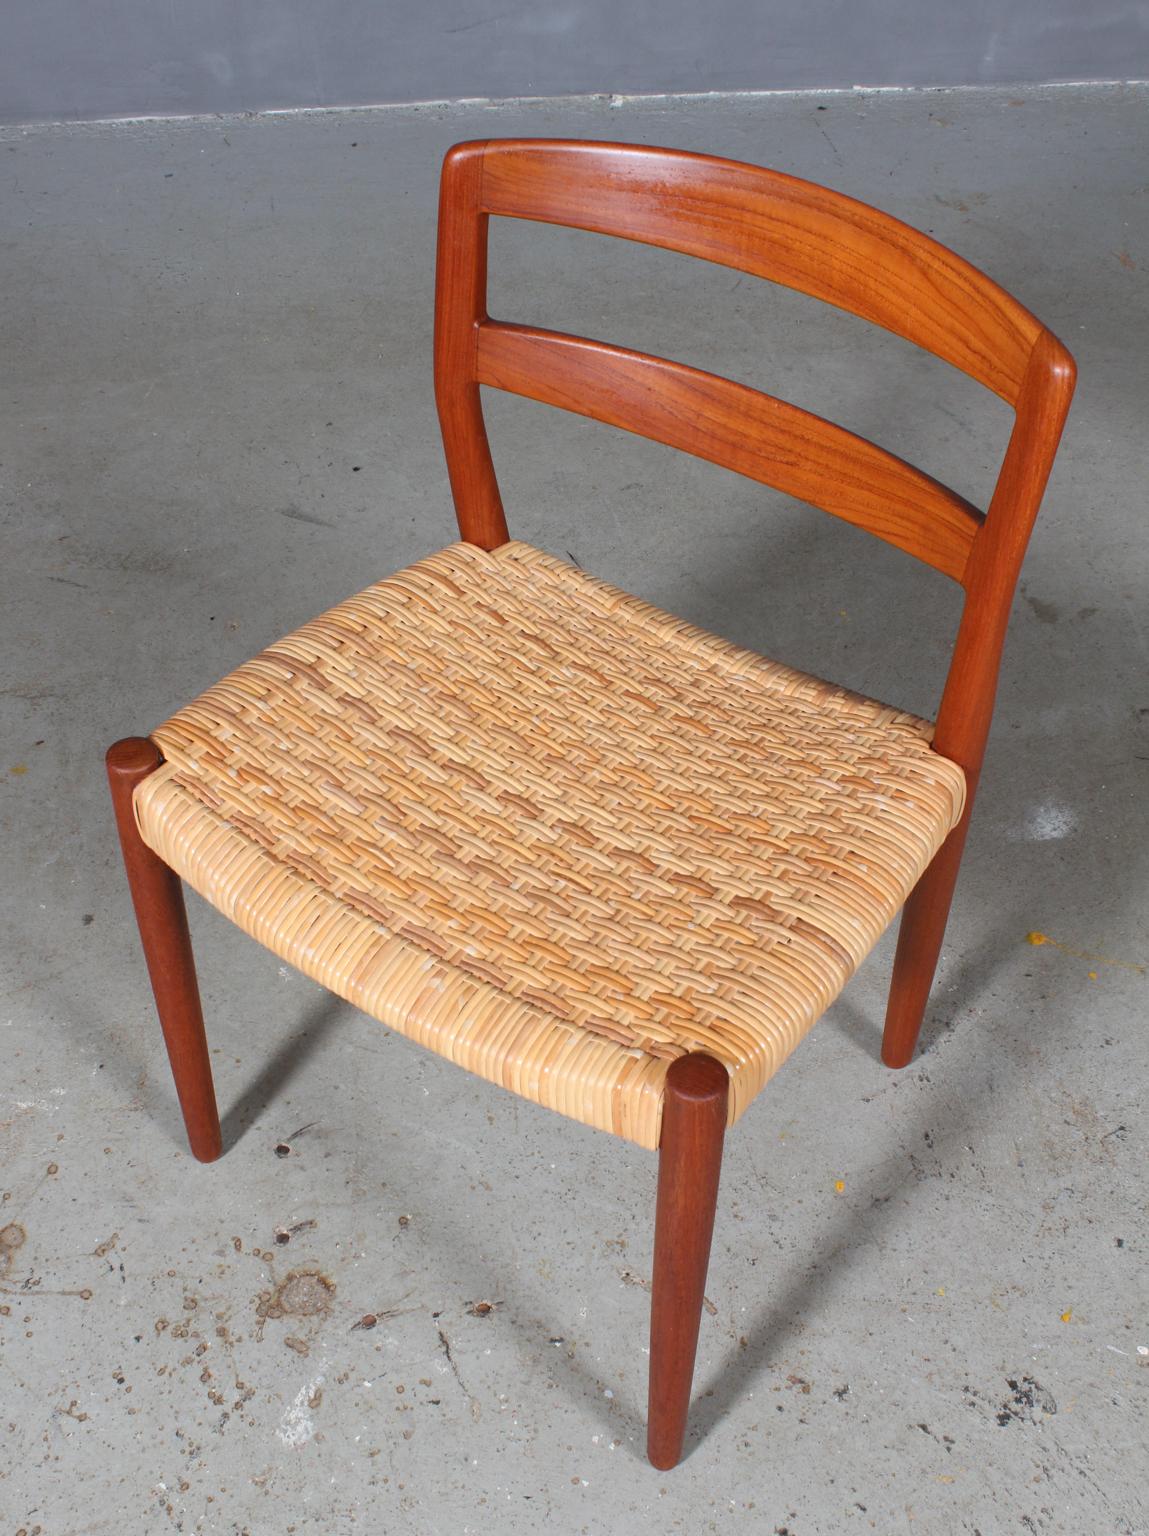 Einer Larsen & Aksel Bender Madsen side chair with cane.

Frame of teak.

Made by Cabinetmaker Willy Beck.